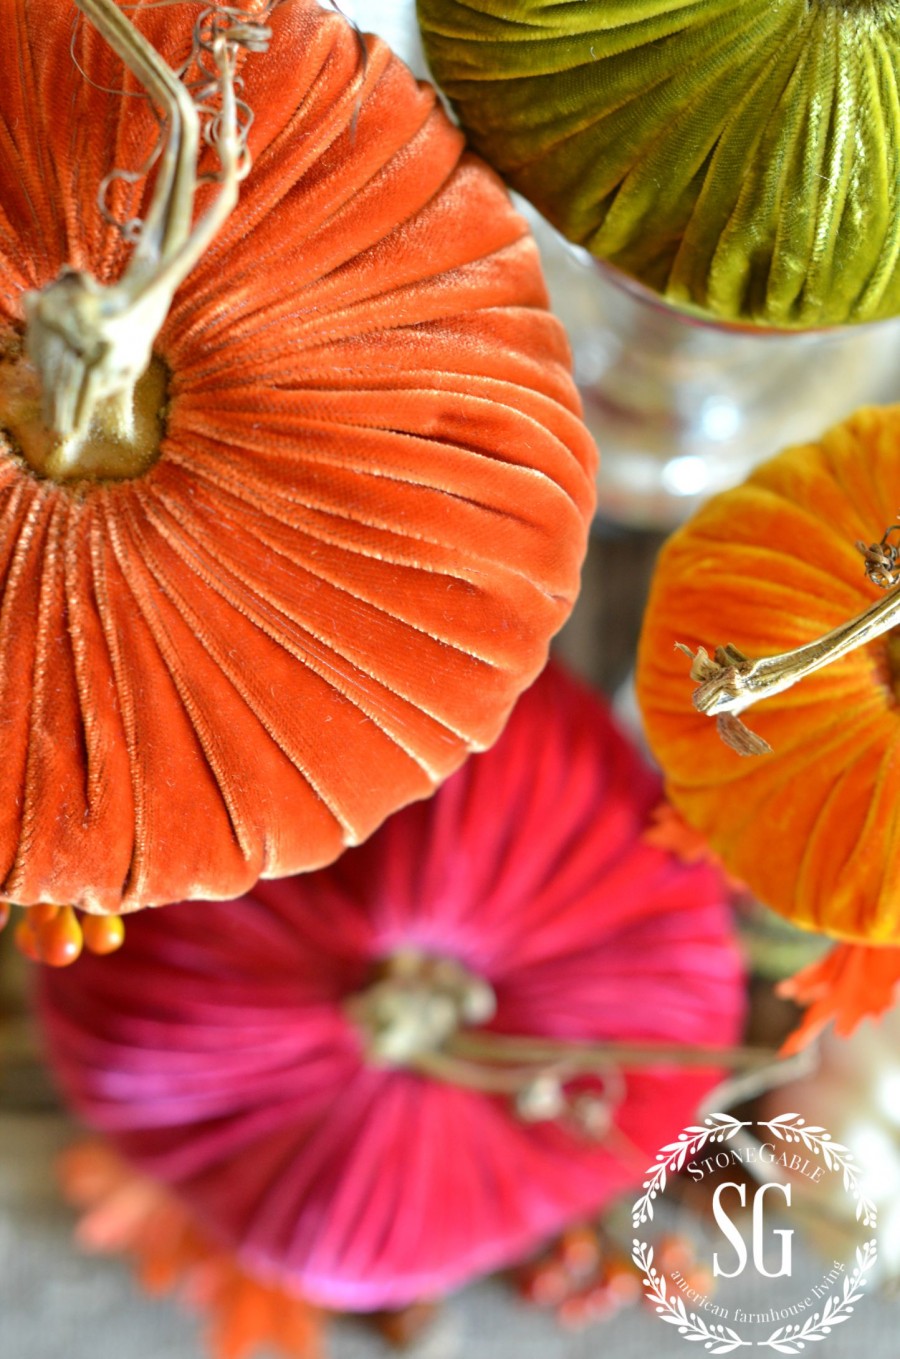 5 BEAUTIFUL WAYS TO STYLE PUMPKINS-pumpkins-velvet-colorful-top- stonegableblog.com